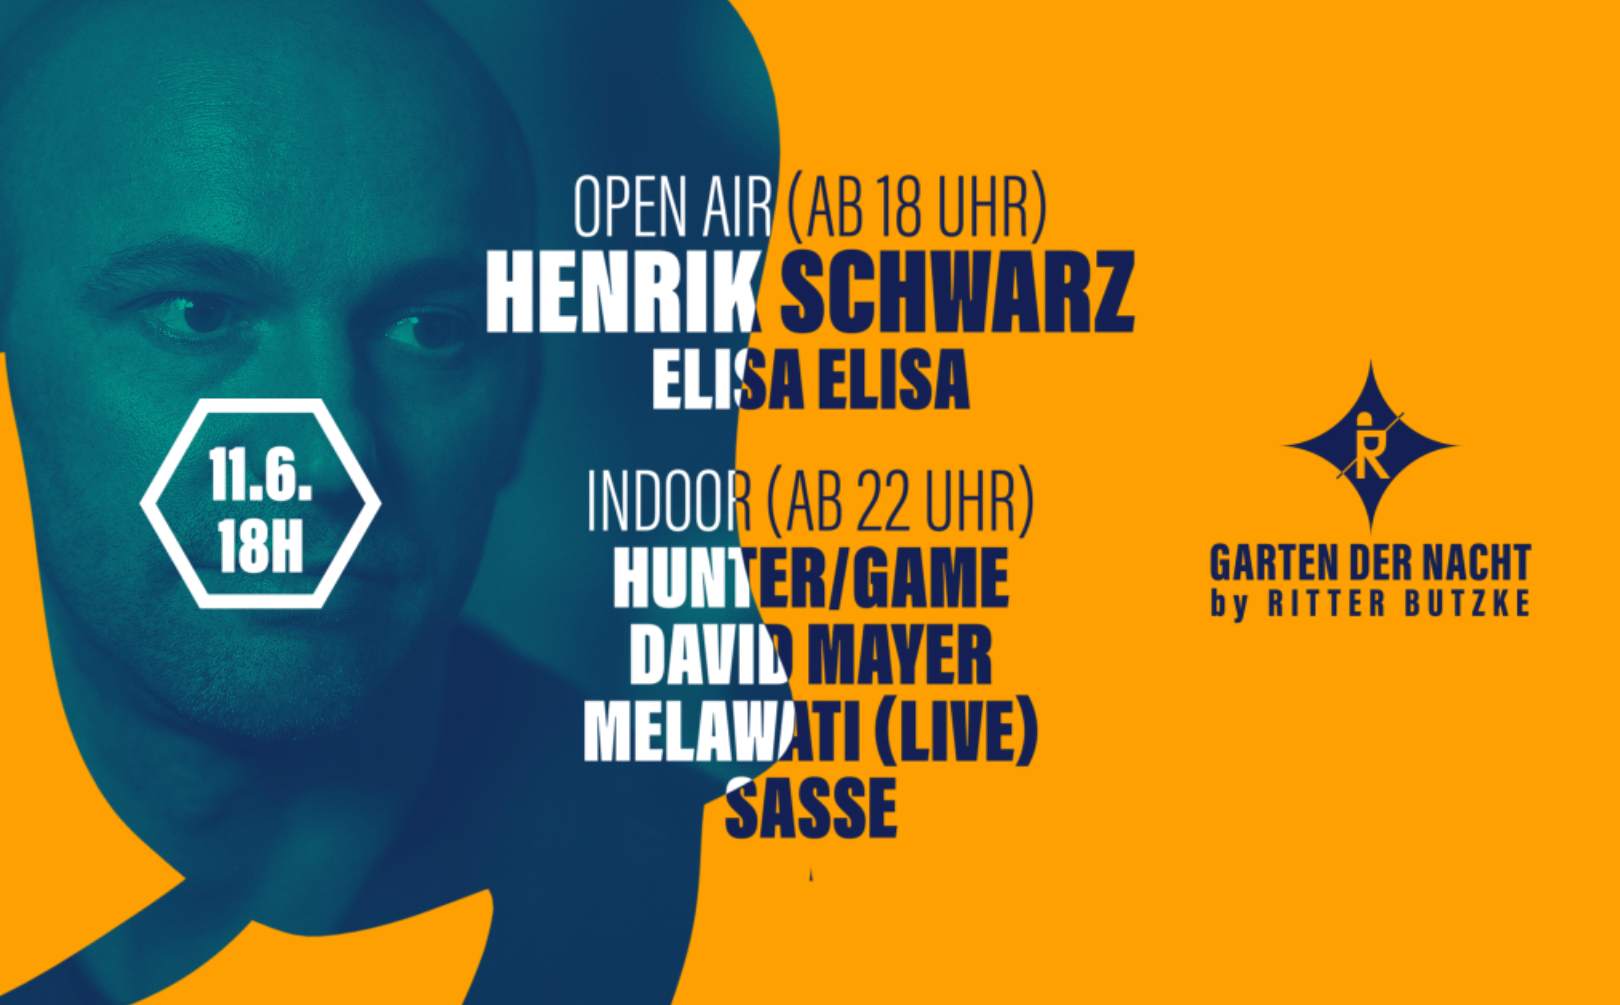 Henrik Schwarz (live) at Kulturgarten Open Air - フライヤー表